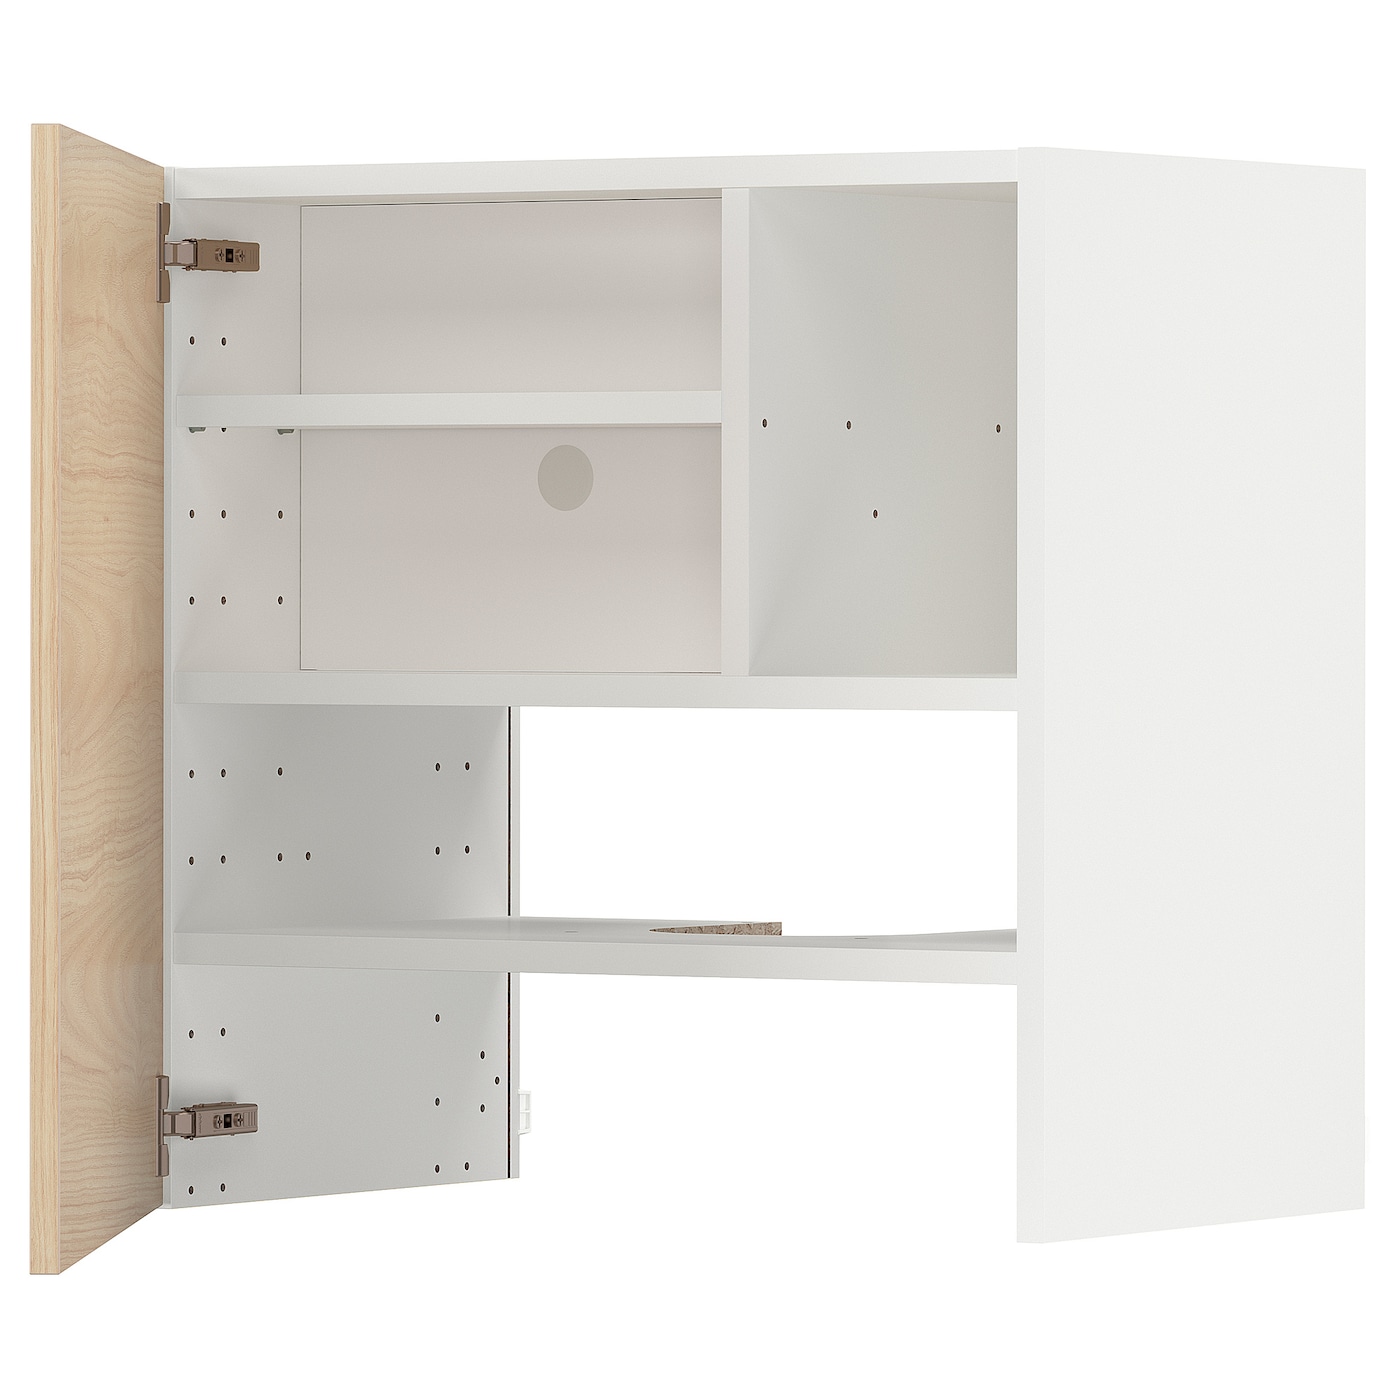 Навесной шкаф - METOD IKEA/ МЕТОД ИКЕА, 60х60 см, белый/под беленый дуб